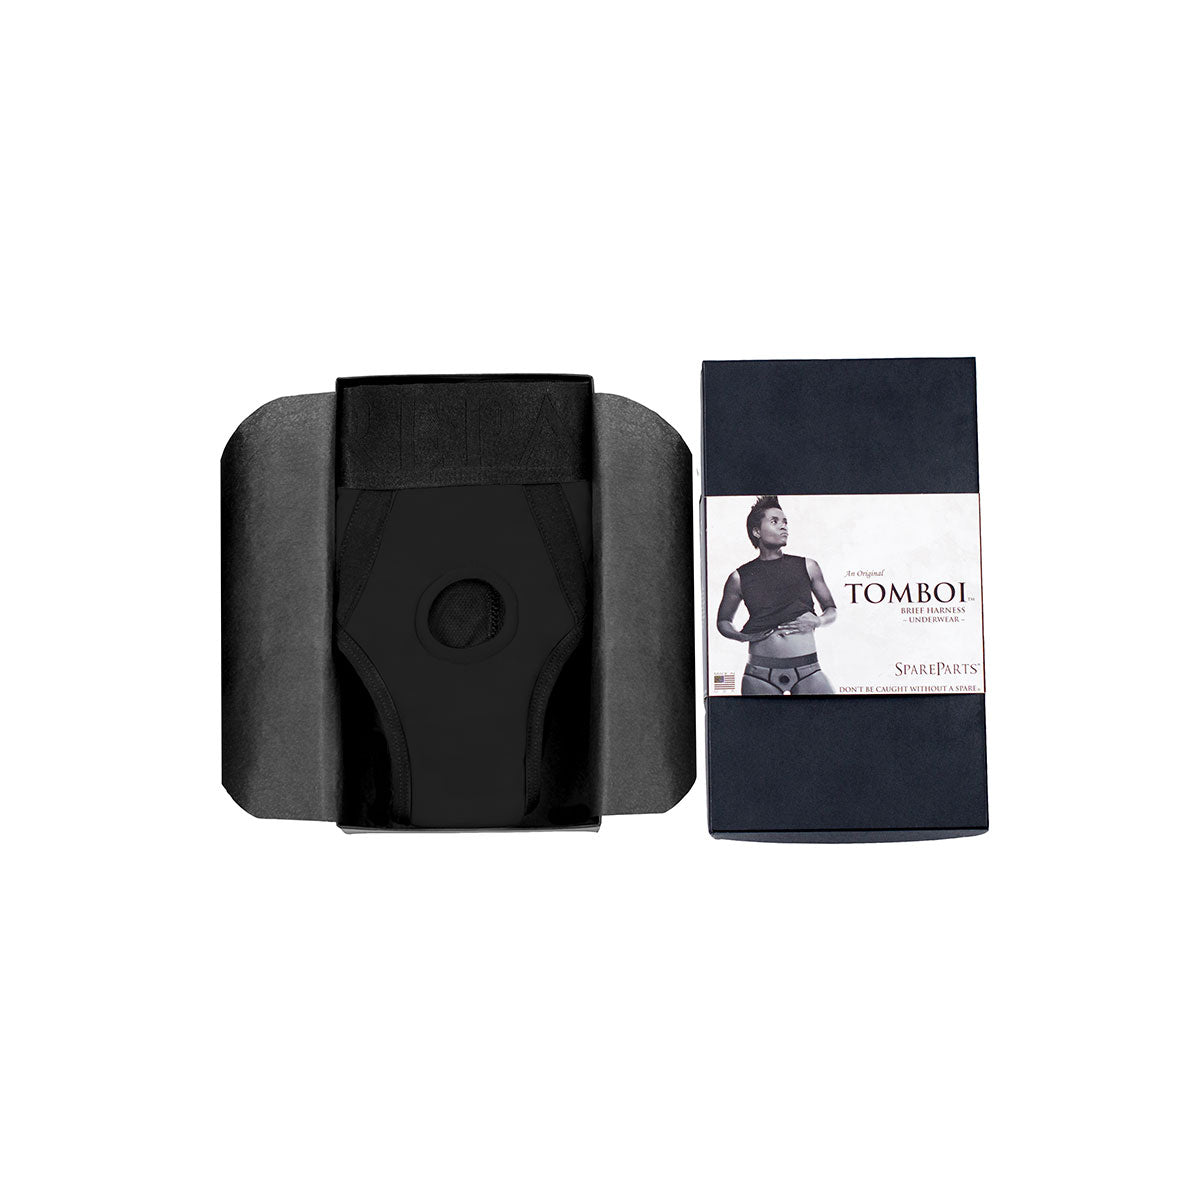 SpareParts Tomboi Harness Black/Black Nylon - 2X